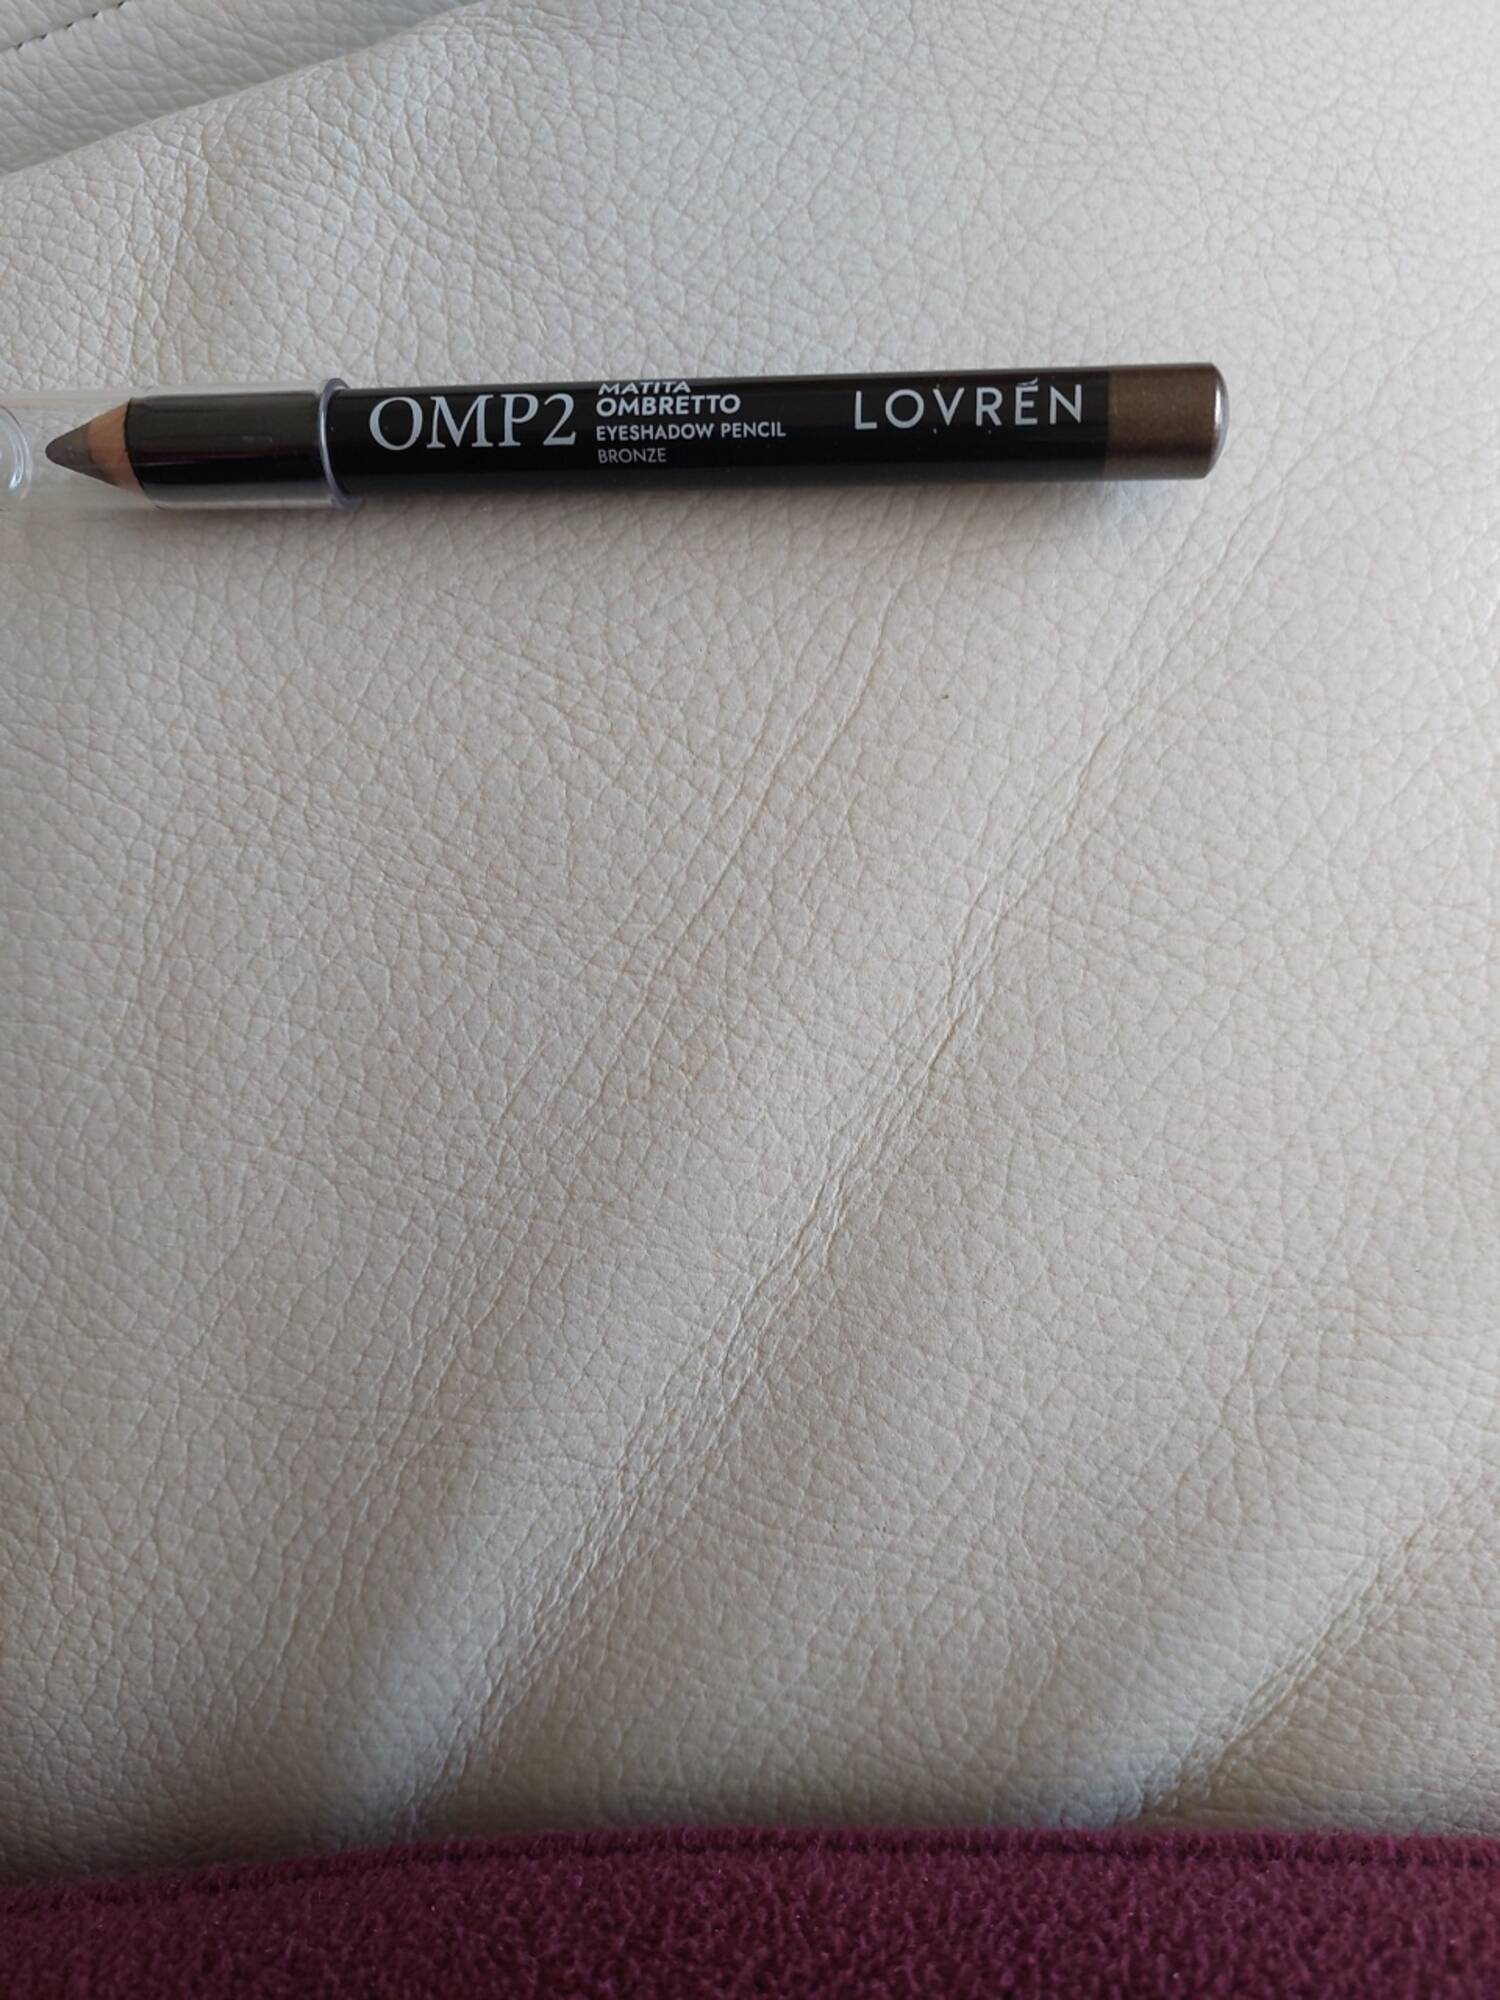 LOVREN - Eyeshadow  pencil bronze OMP2